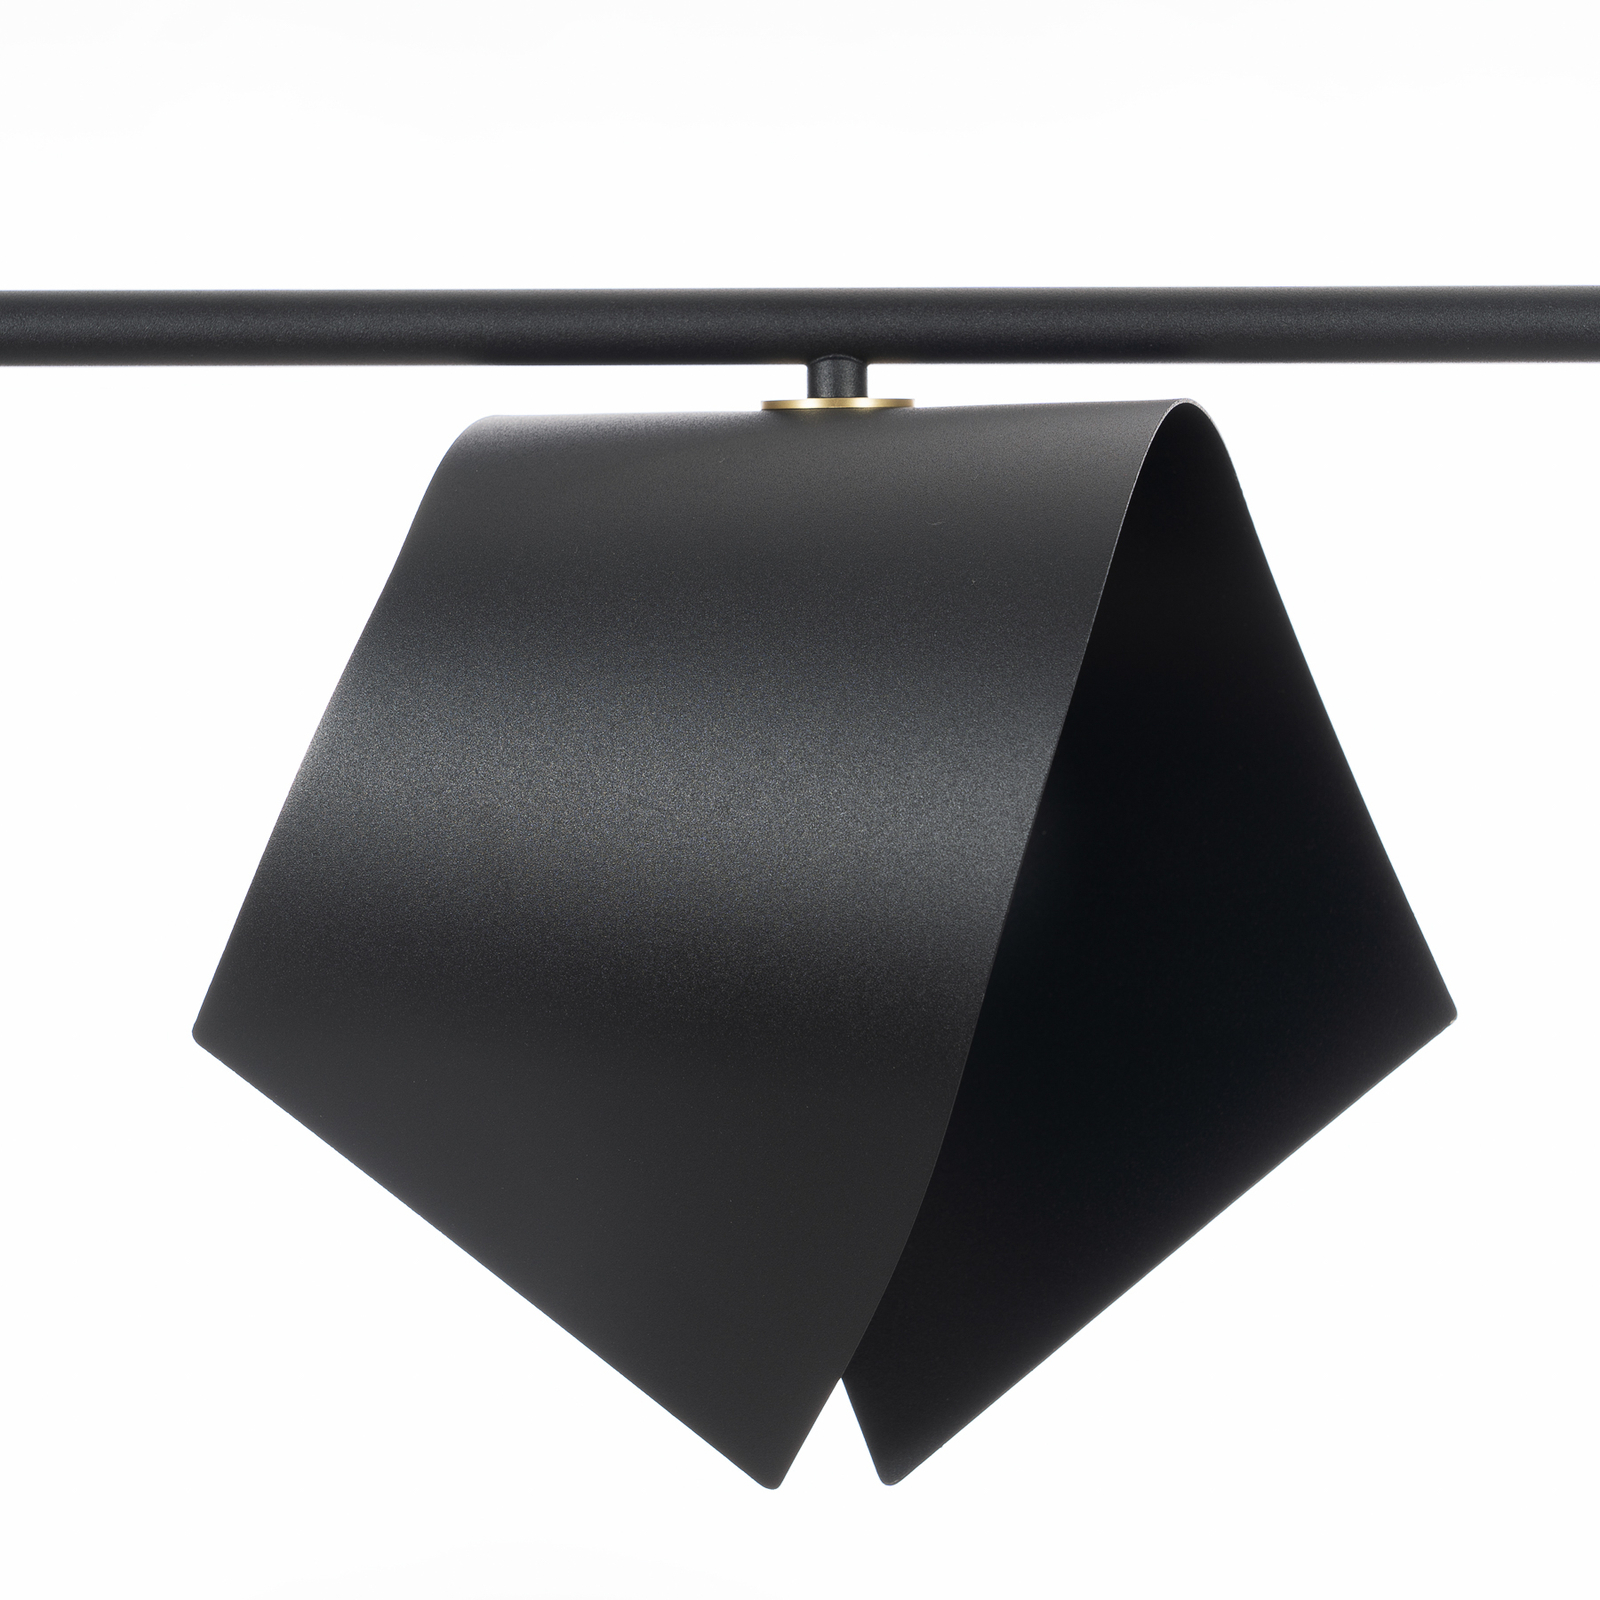 Lucande Mikolay hanglamp, 4-lamps, zwart